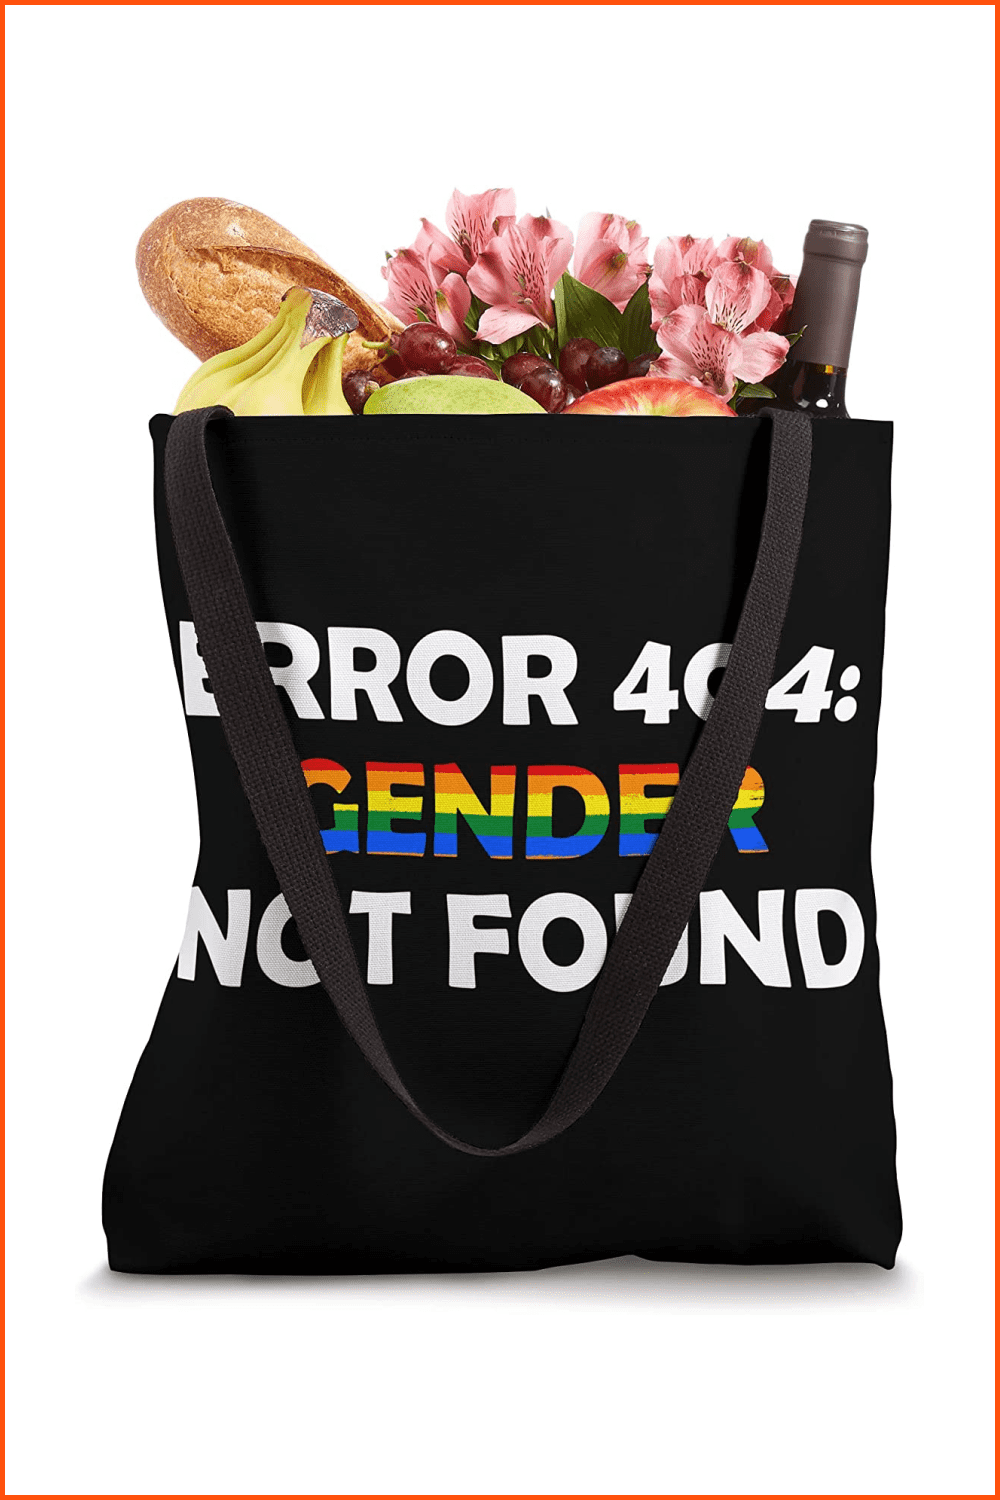 Gender not found - LGBTQ Tote Bag.